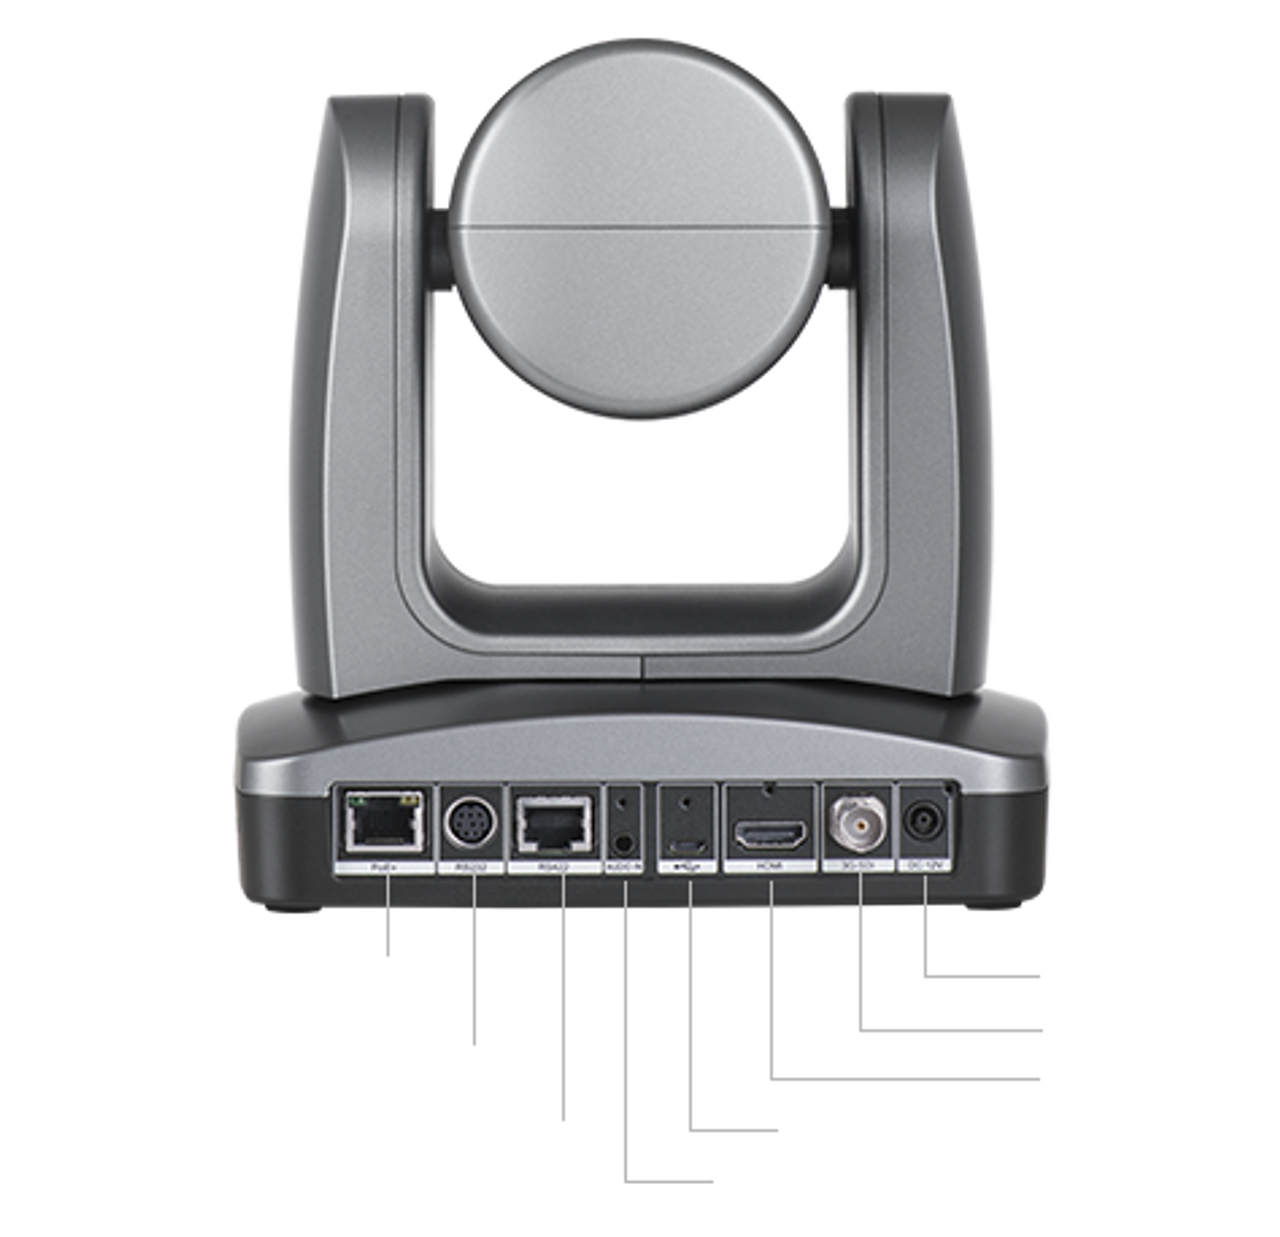 Aver PTZ330N Professional Full HD 30x Optical PoE+ PTZ Conference Camera with NDI